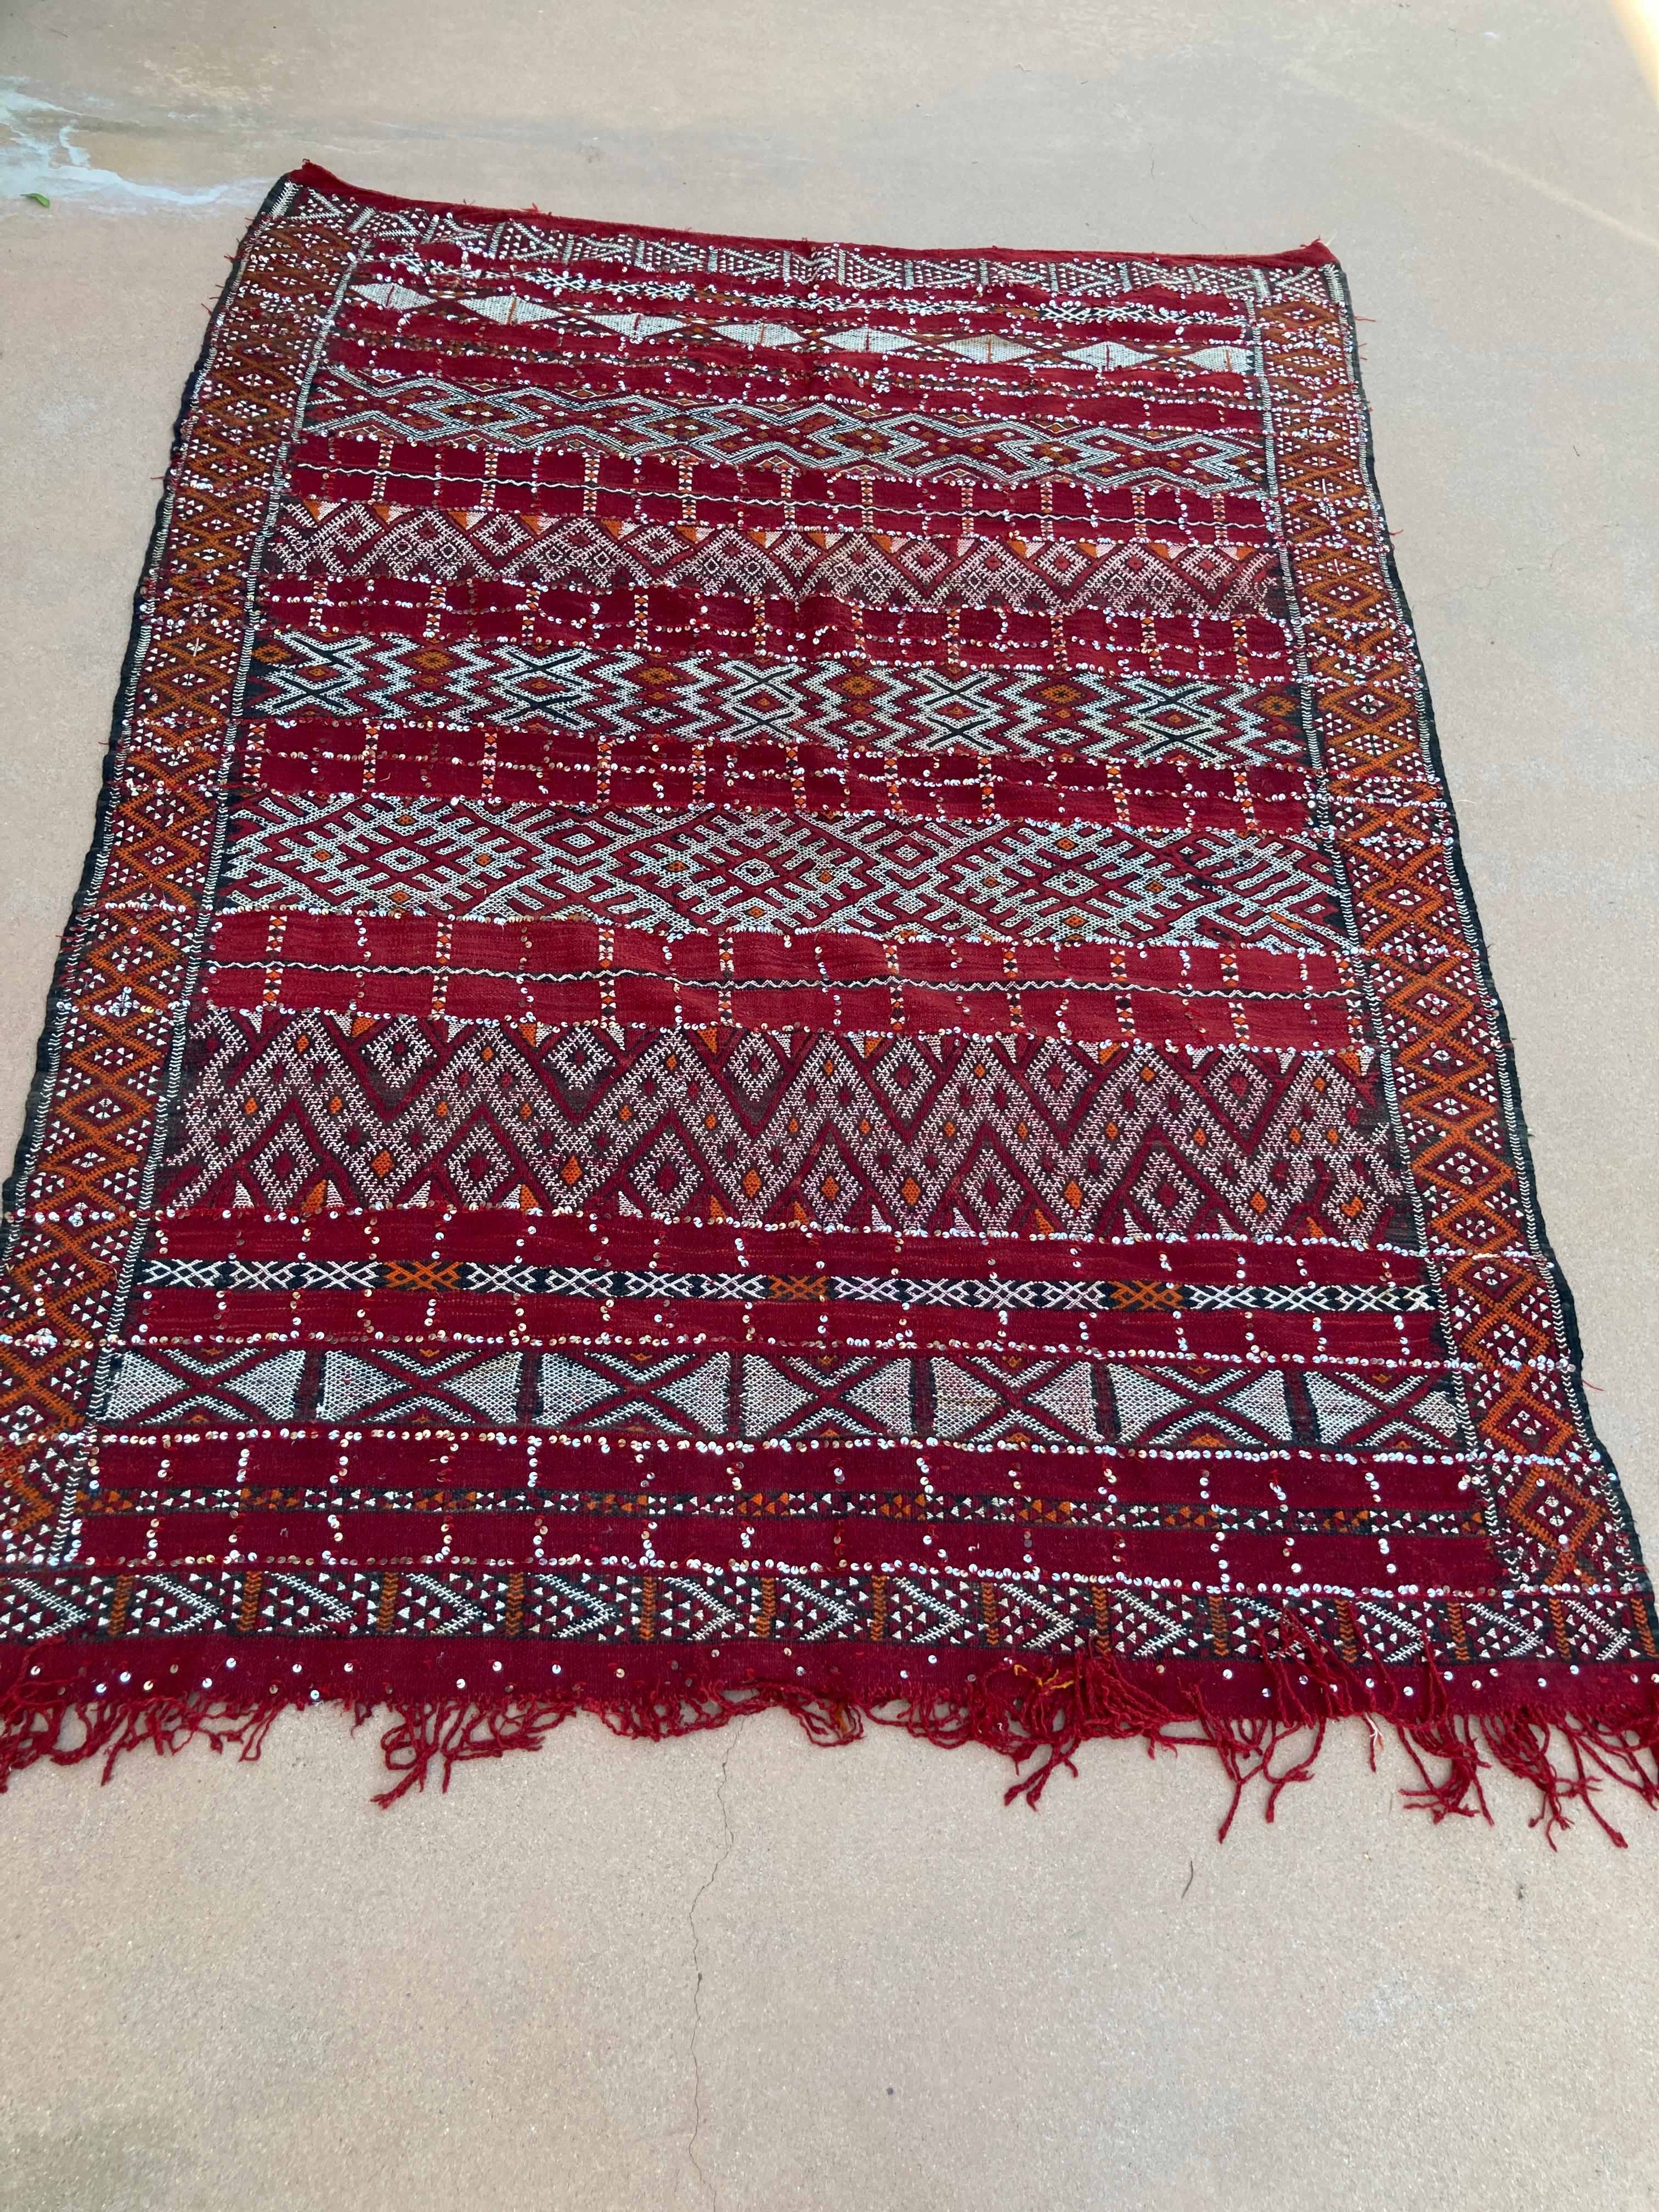 Moroccan Vintage Ethnic Textile with Sequins North Africa, Handira 6